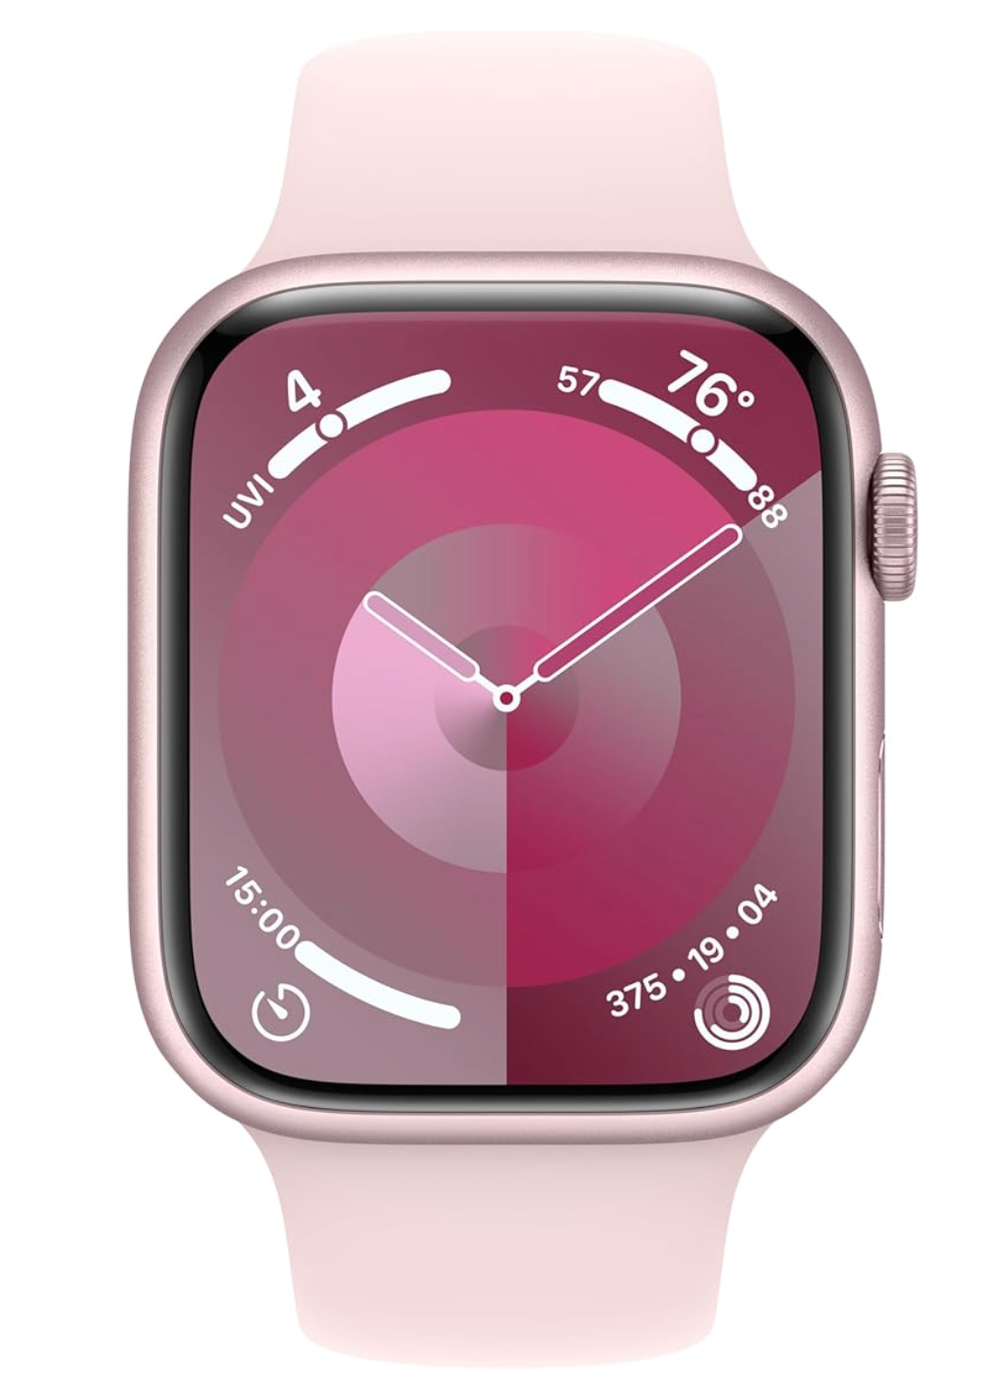 Apple Watch: Light Pink Sports Band